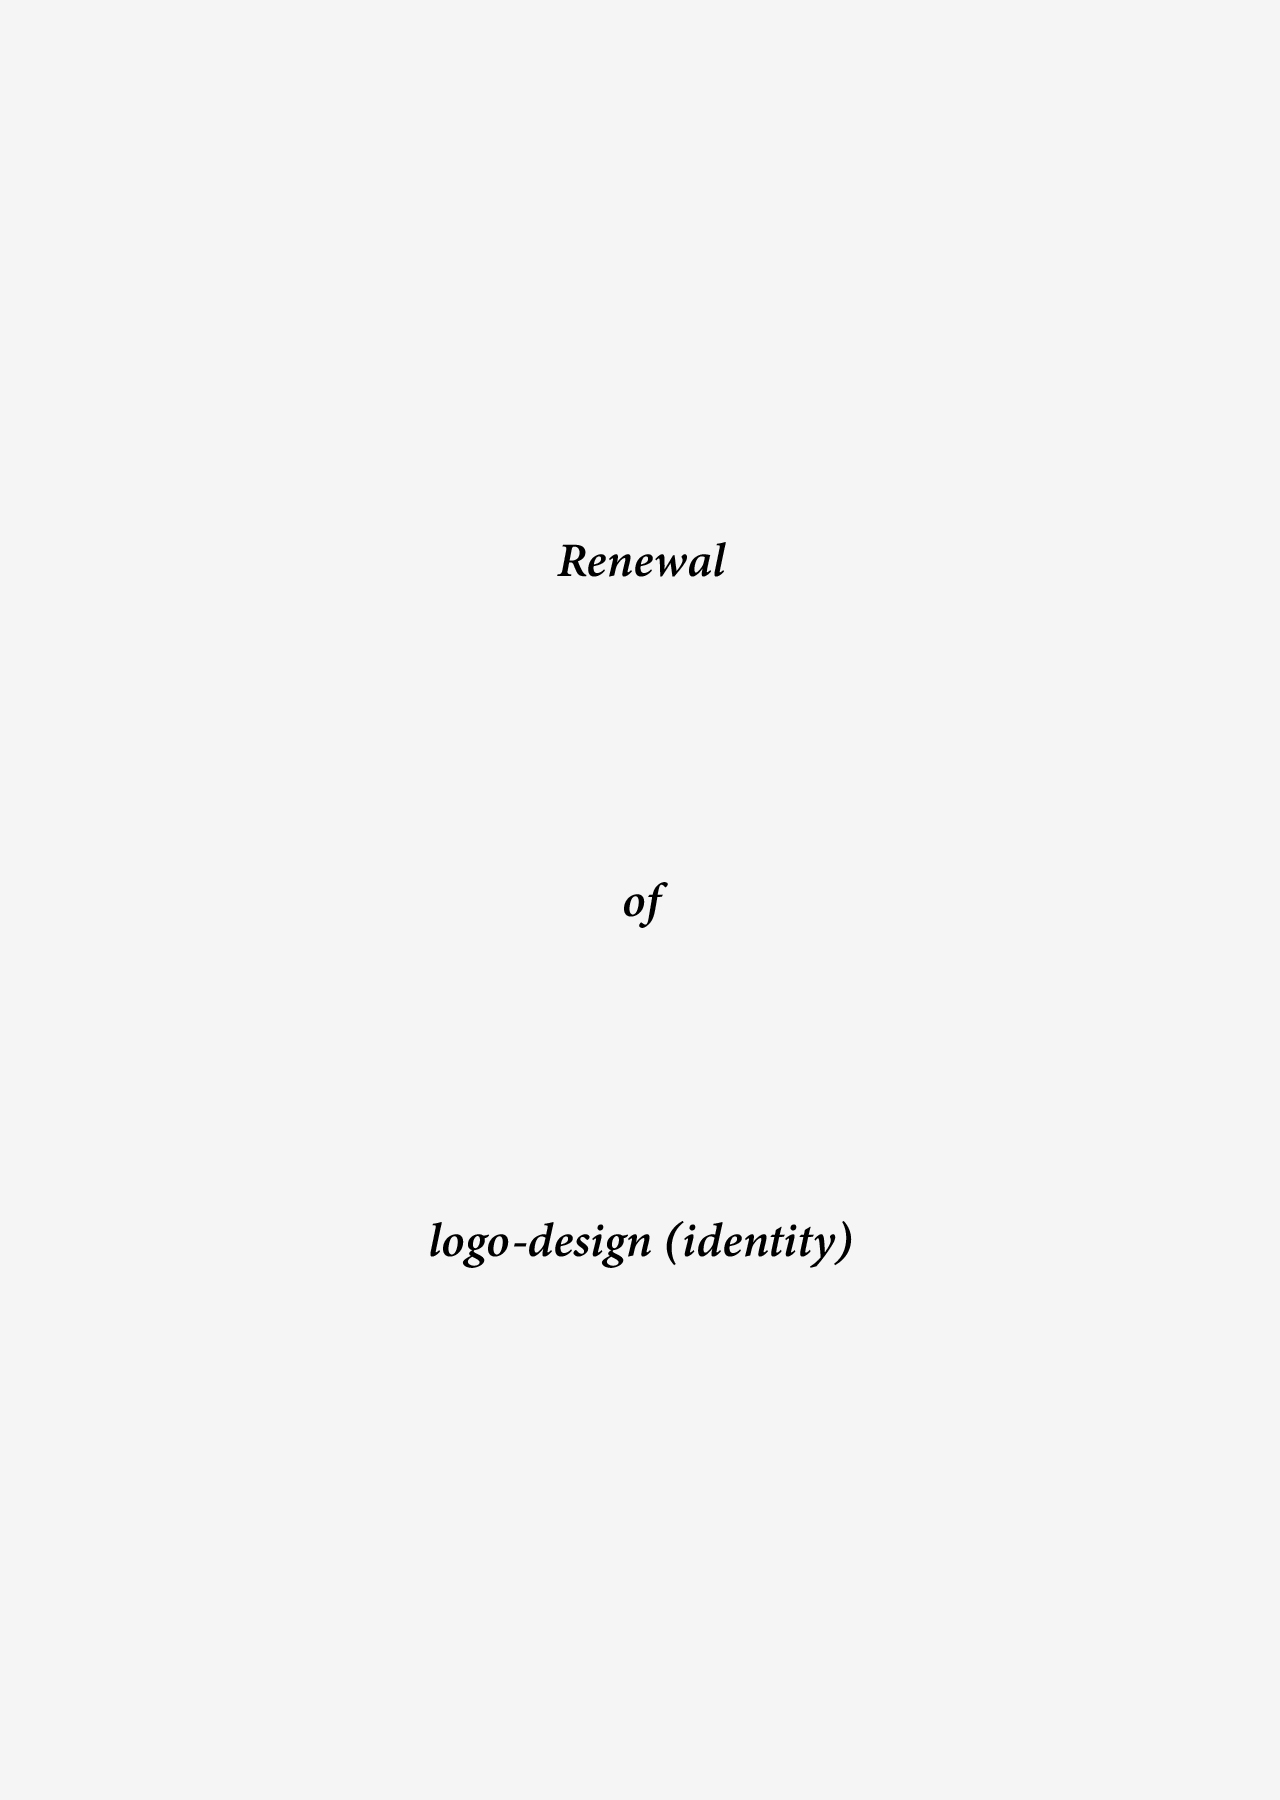 Renewal of logo-design (identity)